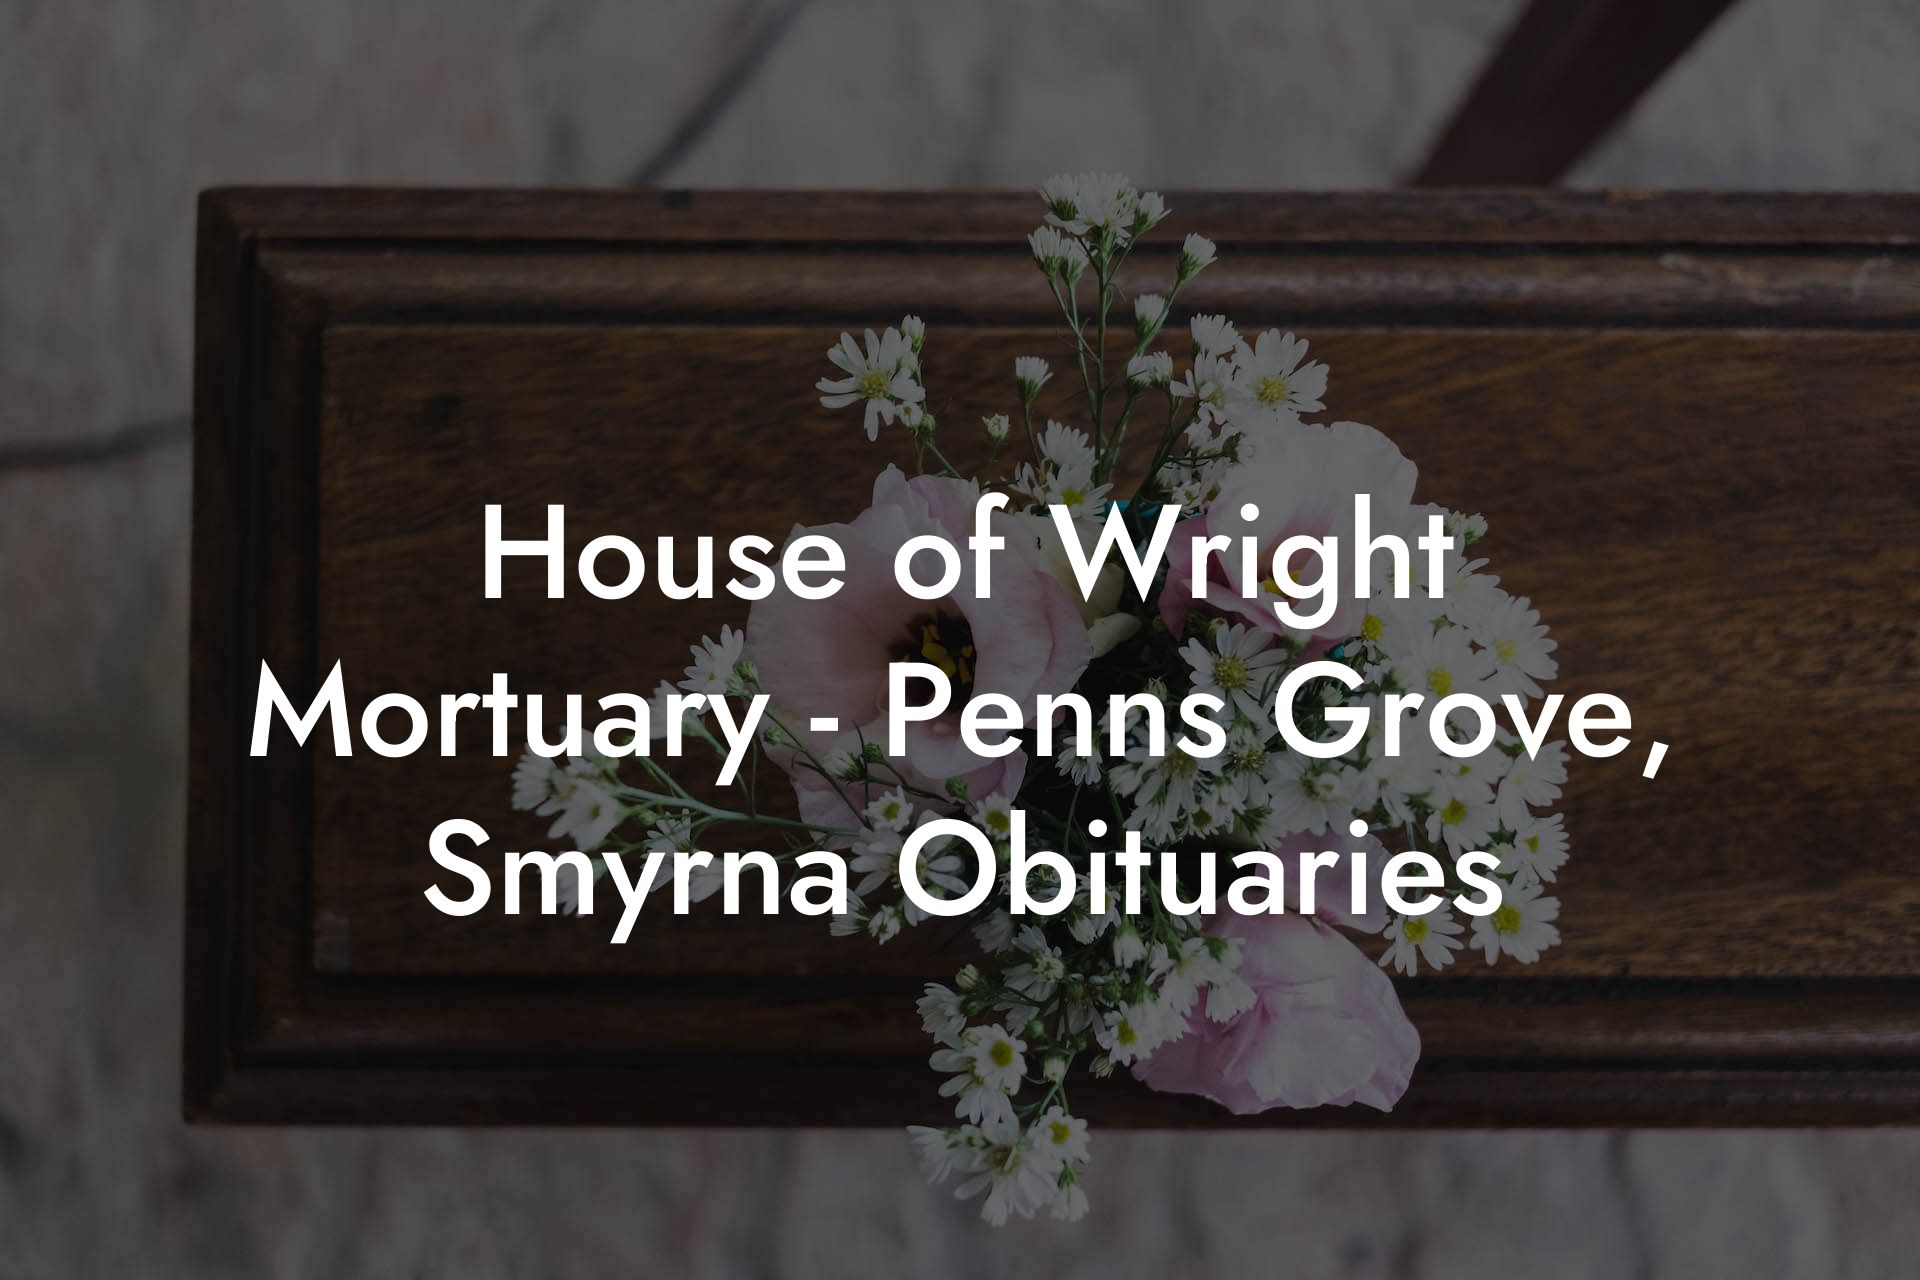 House of Wright Mortuary - Penns Grove, Smyrna Obituaries